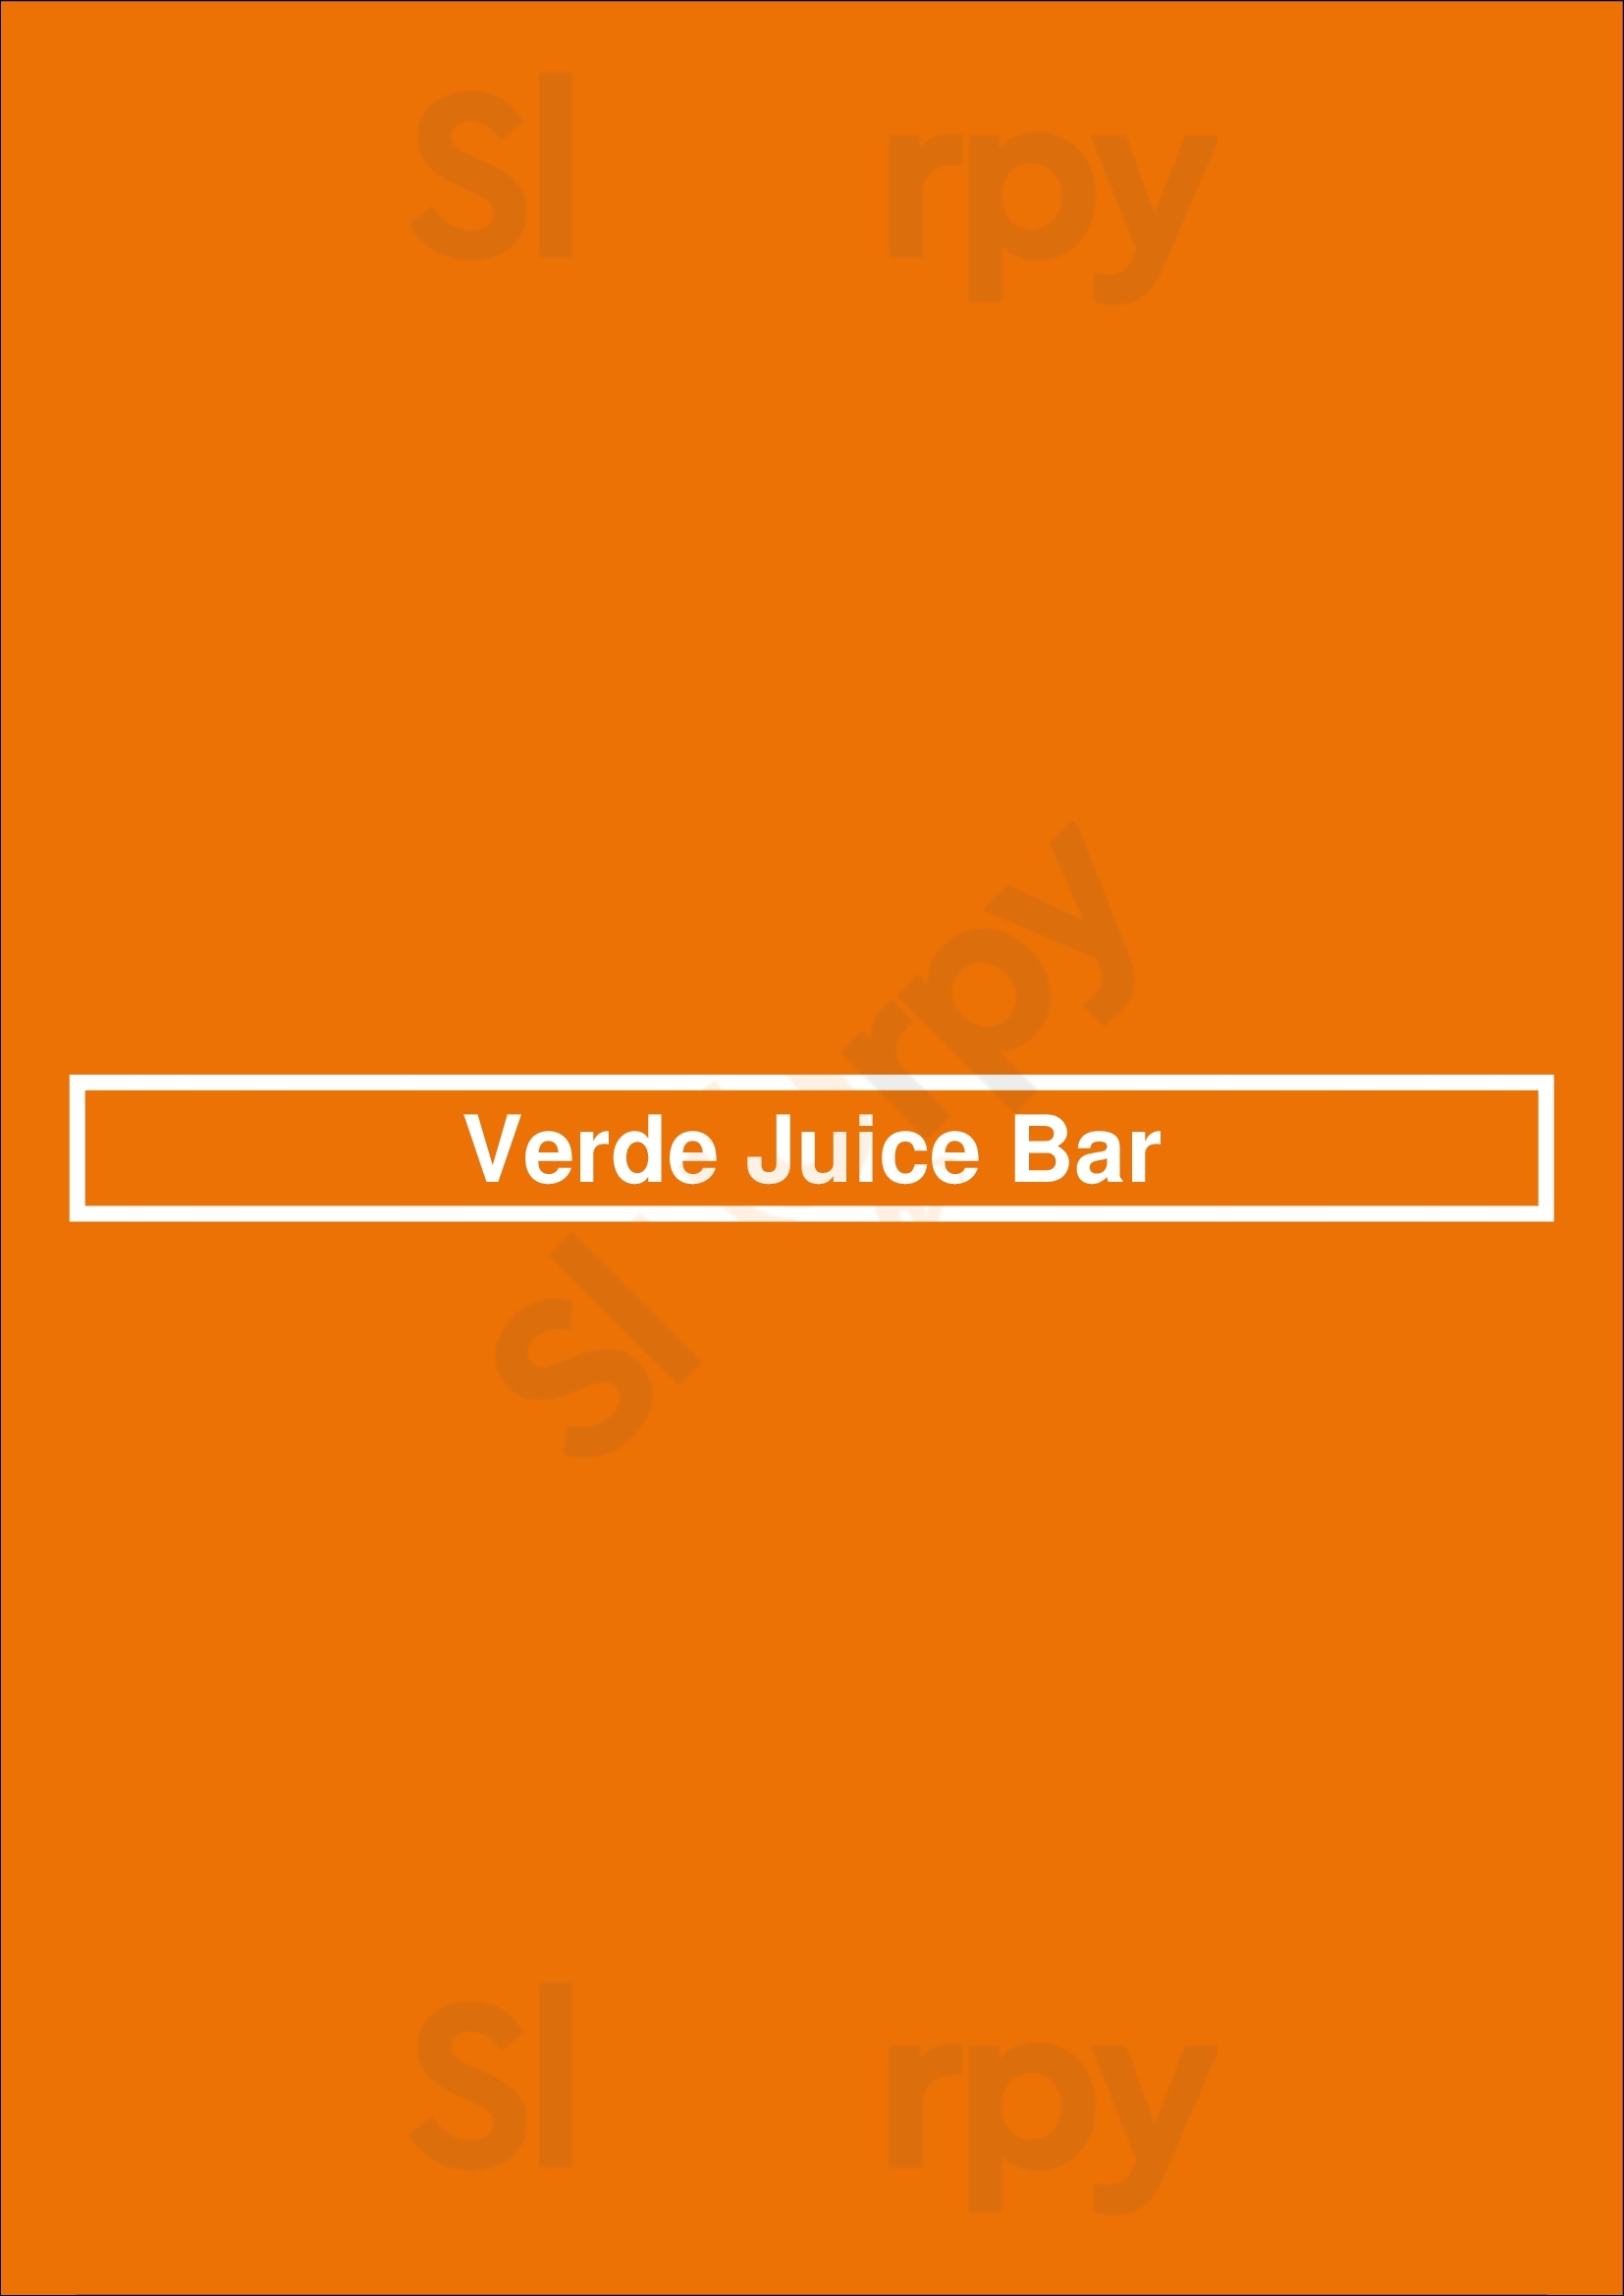 Verde Juice Bar Winnipeg Menu - 1